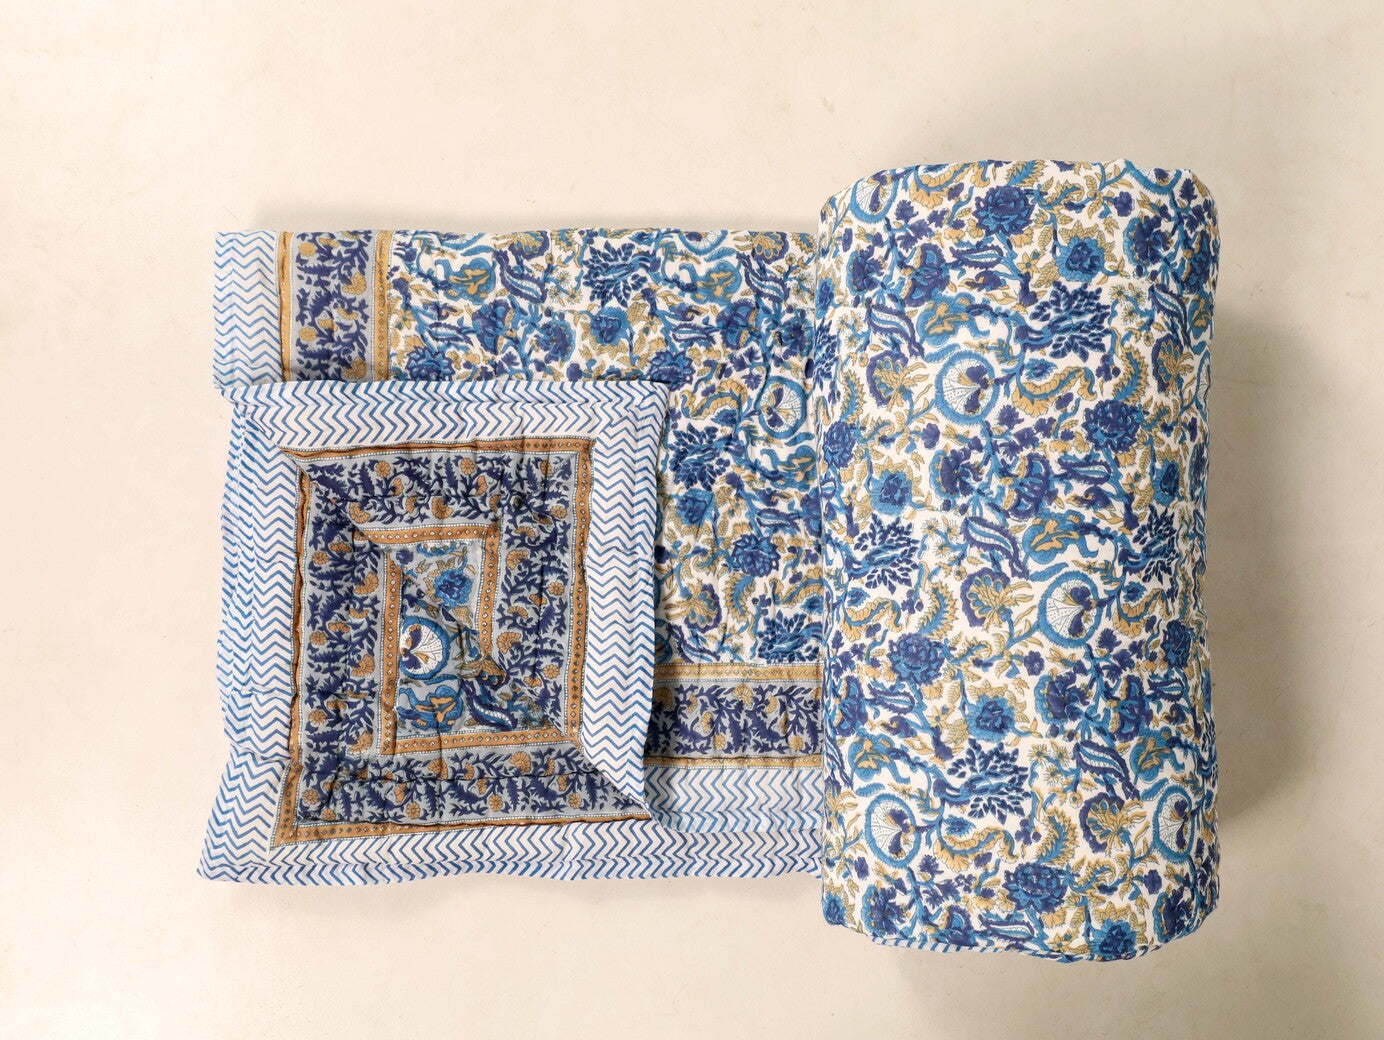 Jaipuri Razai With Pillow Covers - Lumi Navy Blue